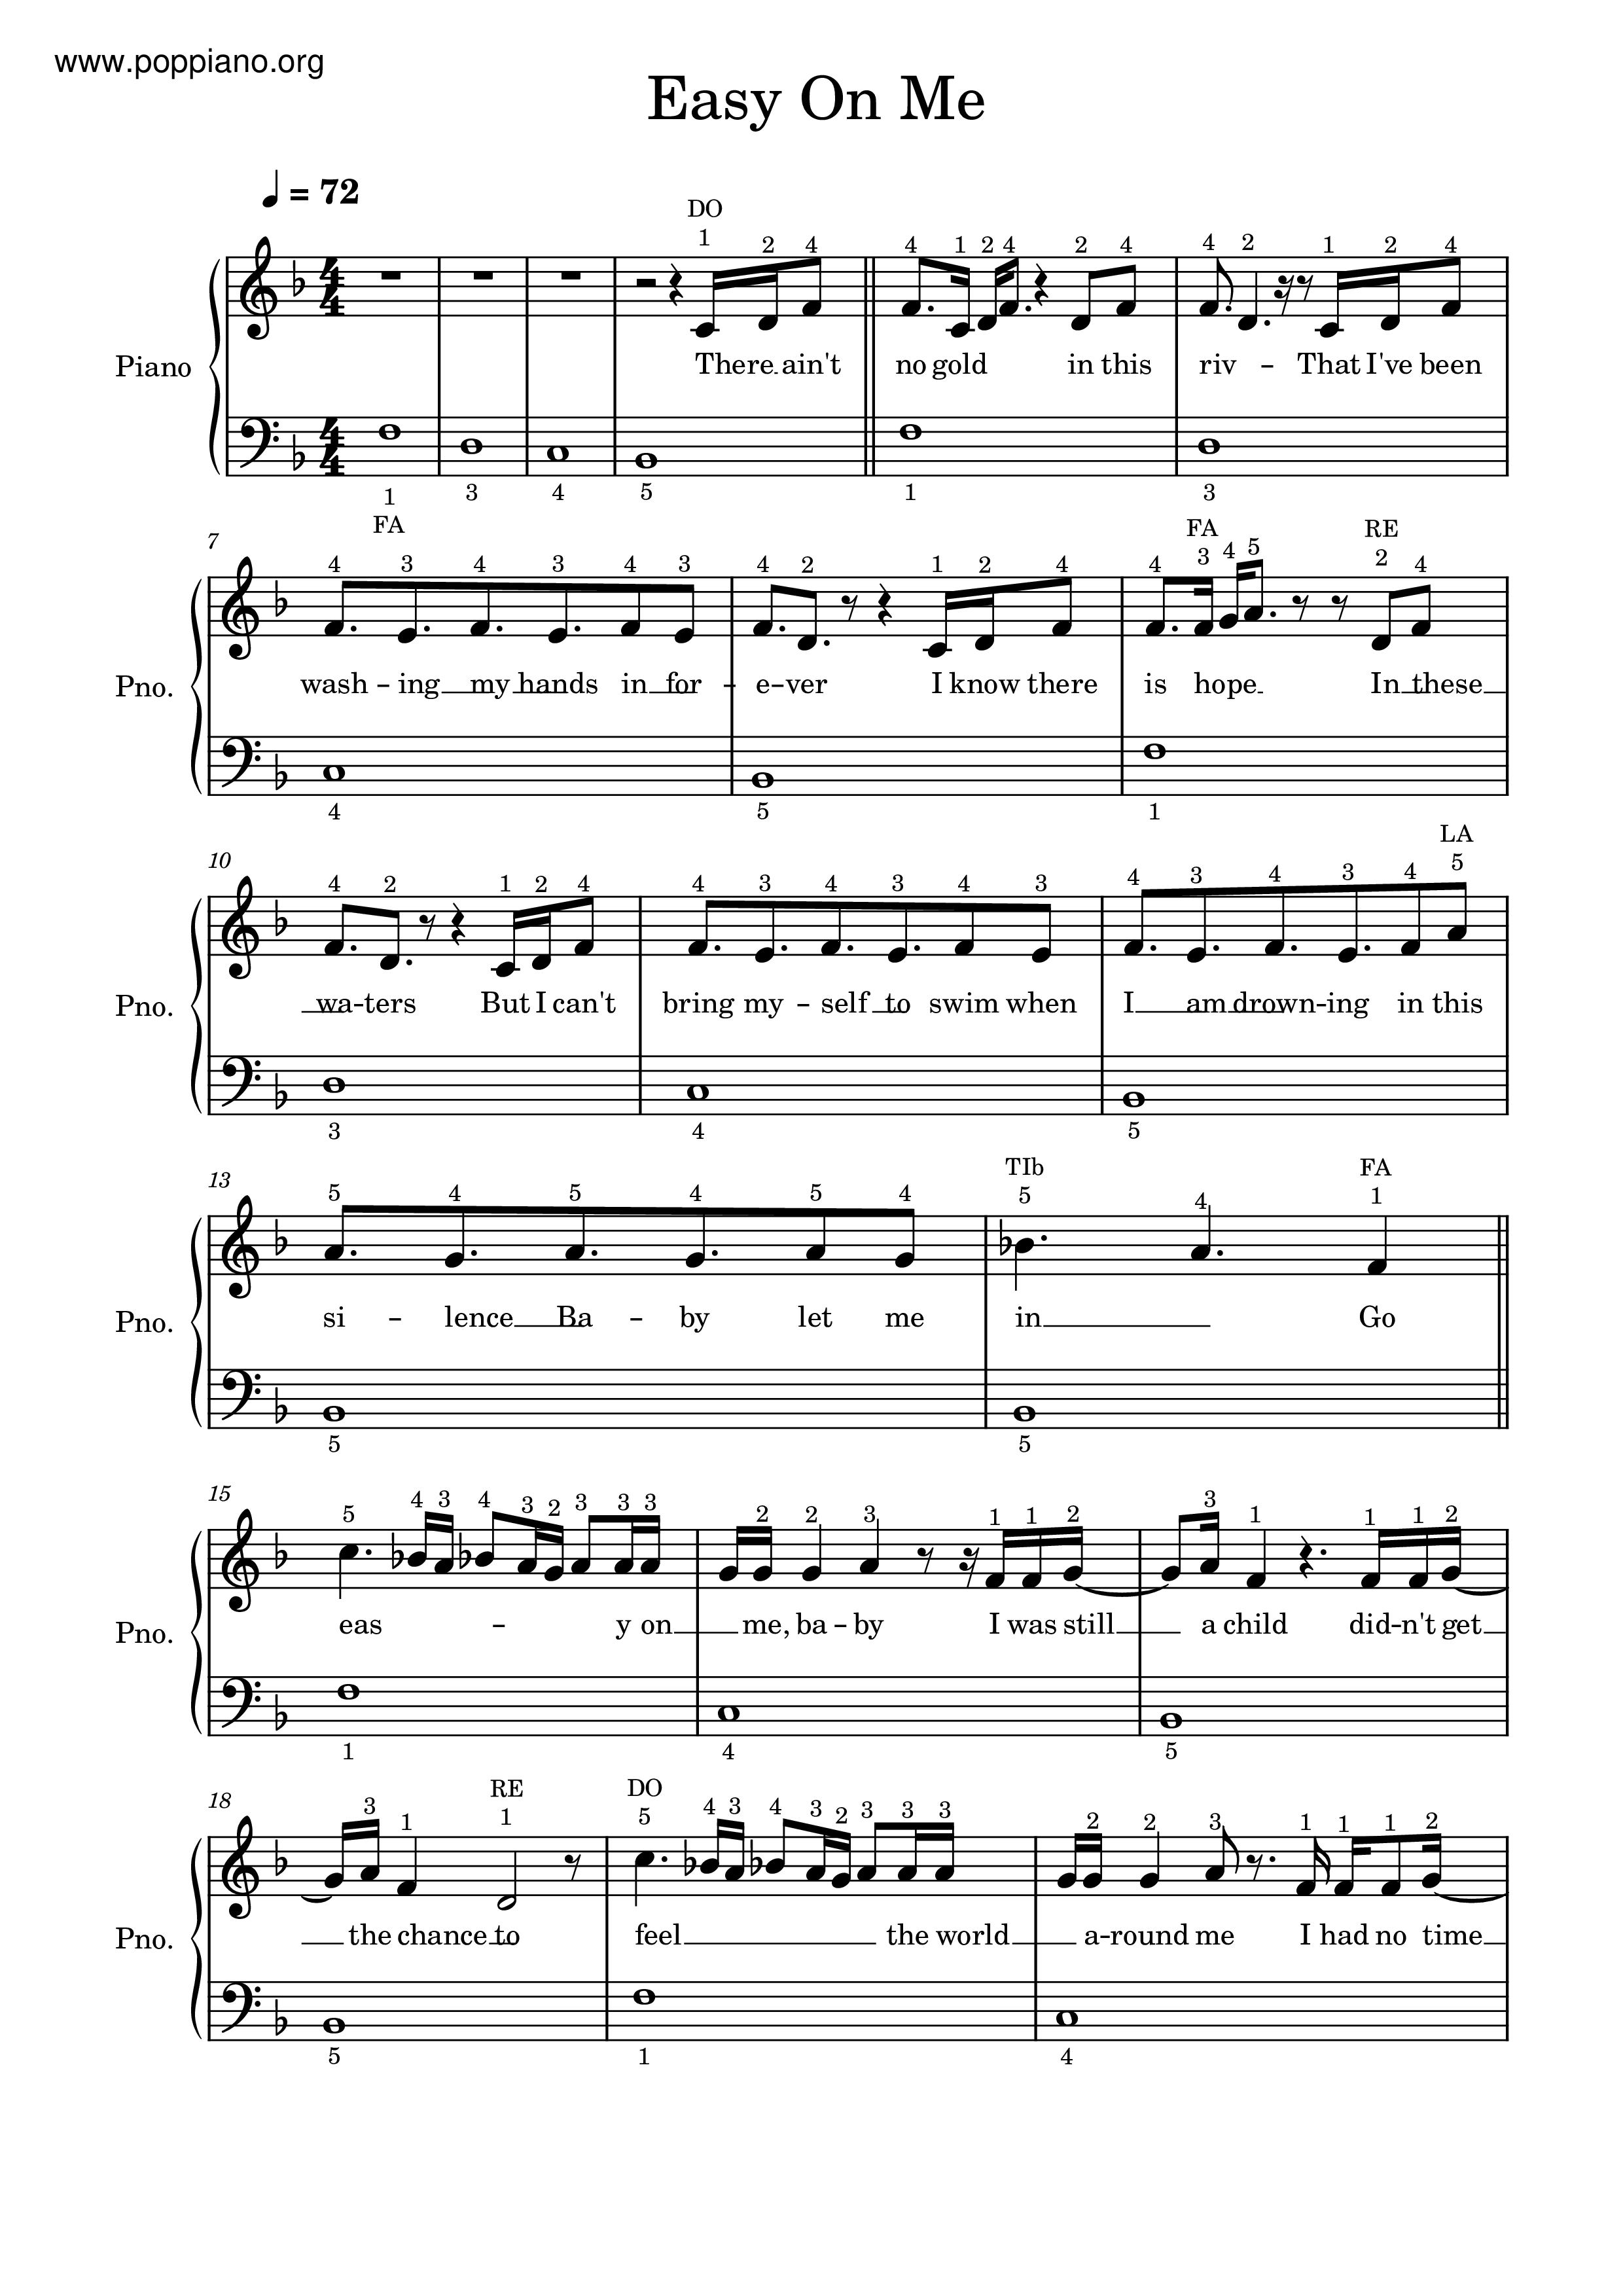 Easy On Me - Partitura para Piano Fácil en PDF - La Touche Musicale